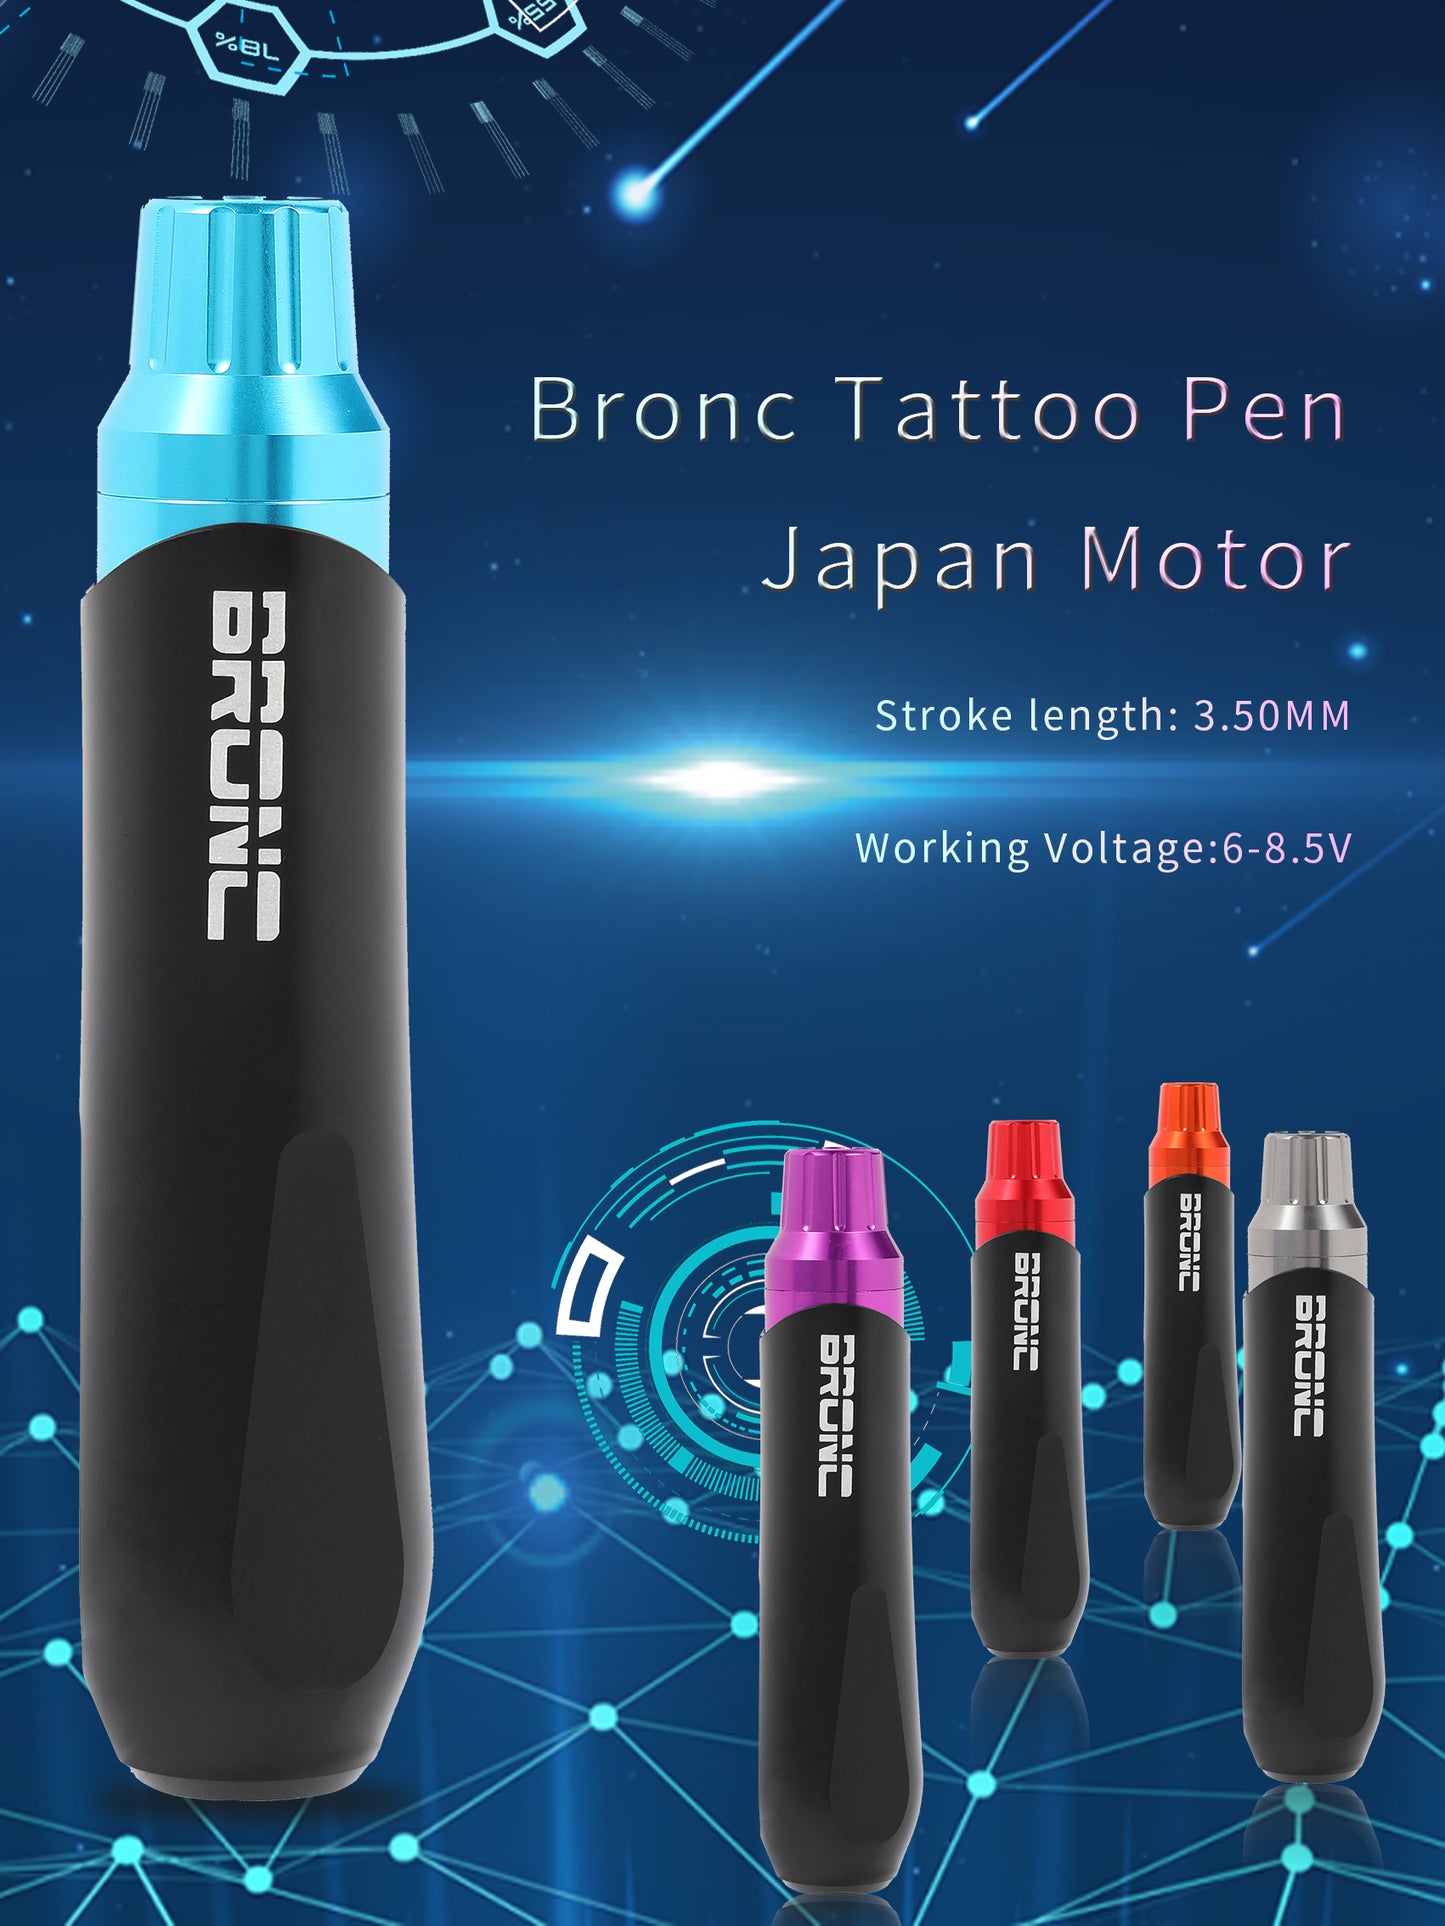 Bronc Tattoo Pen with Japan Motor